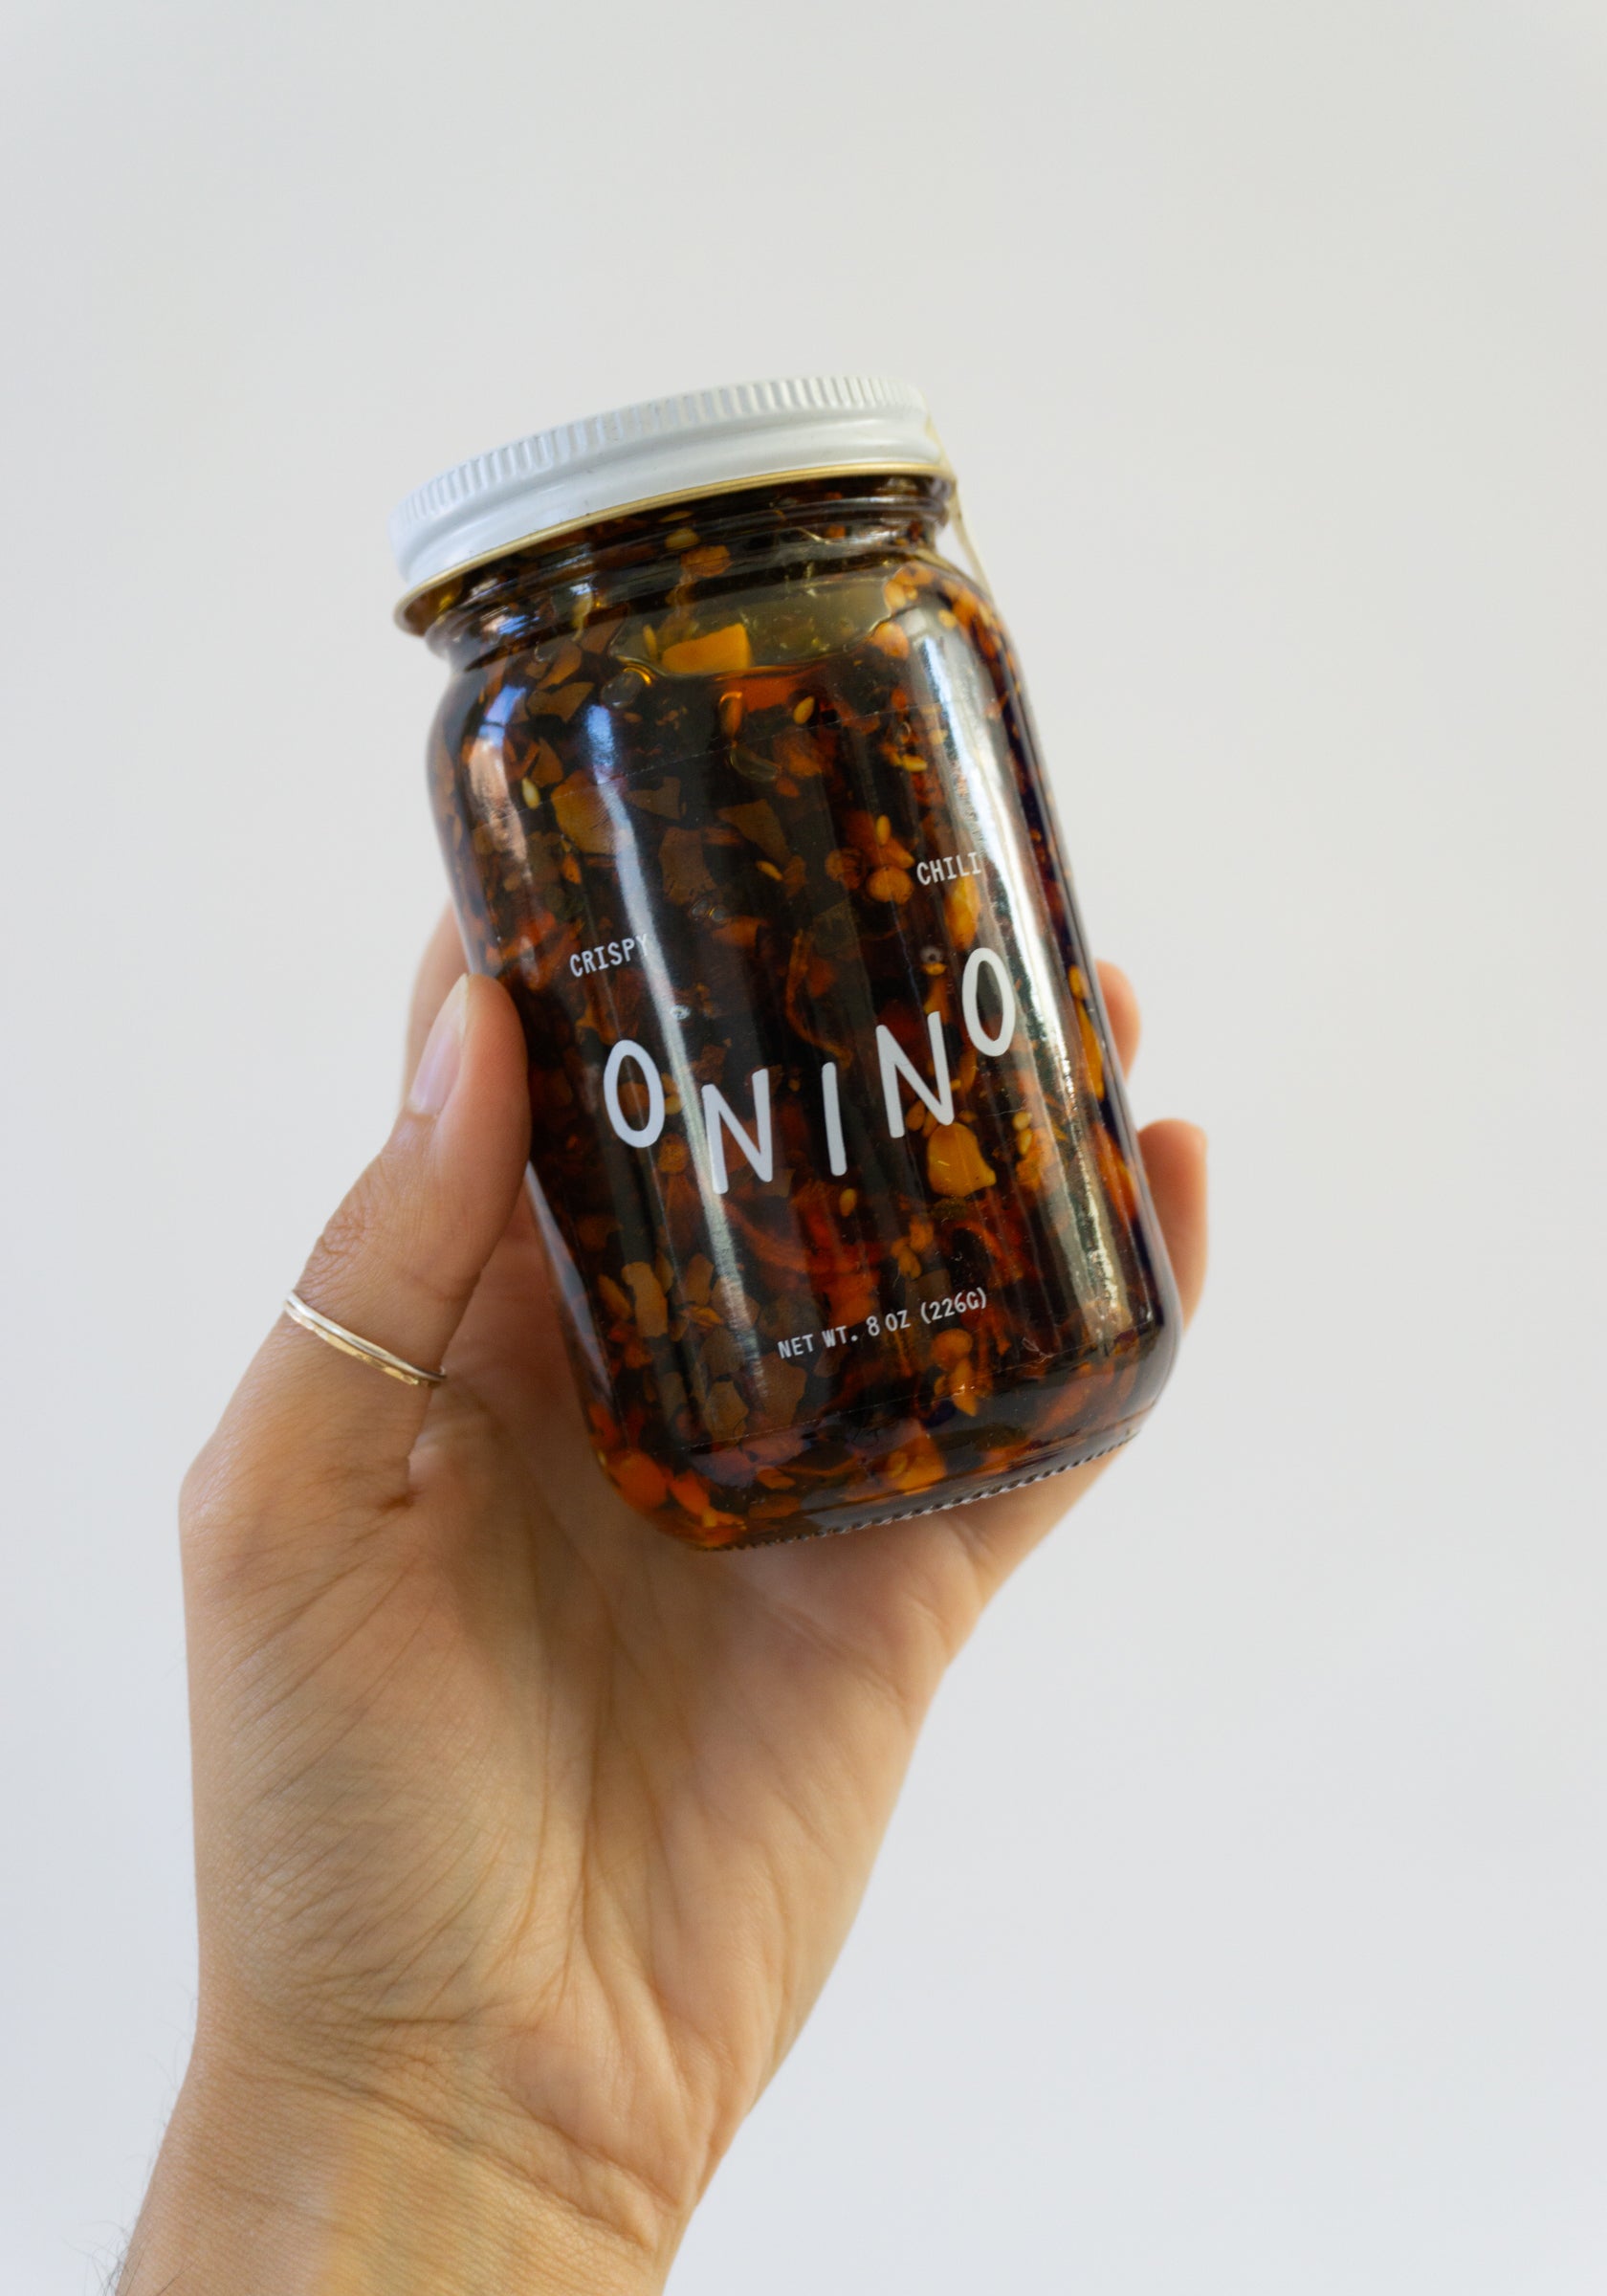 Onino Chili Oil